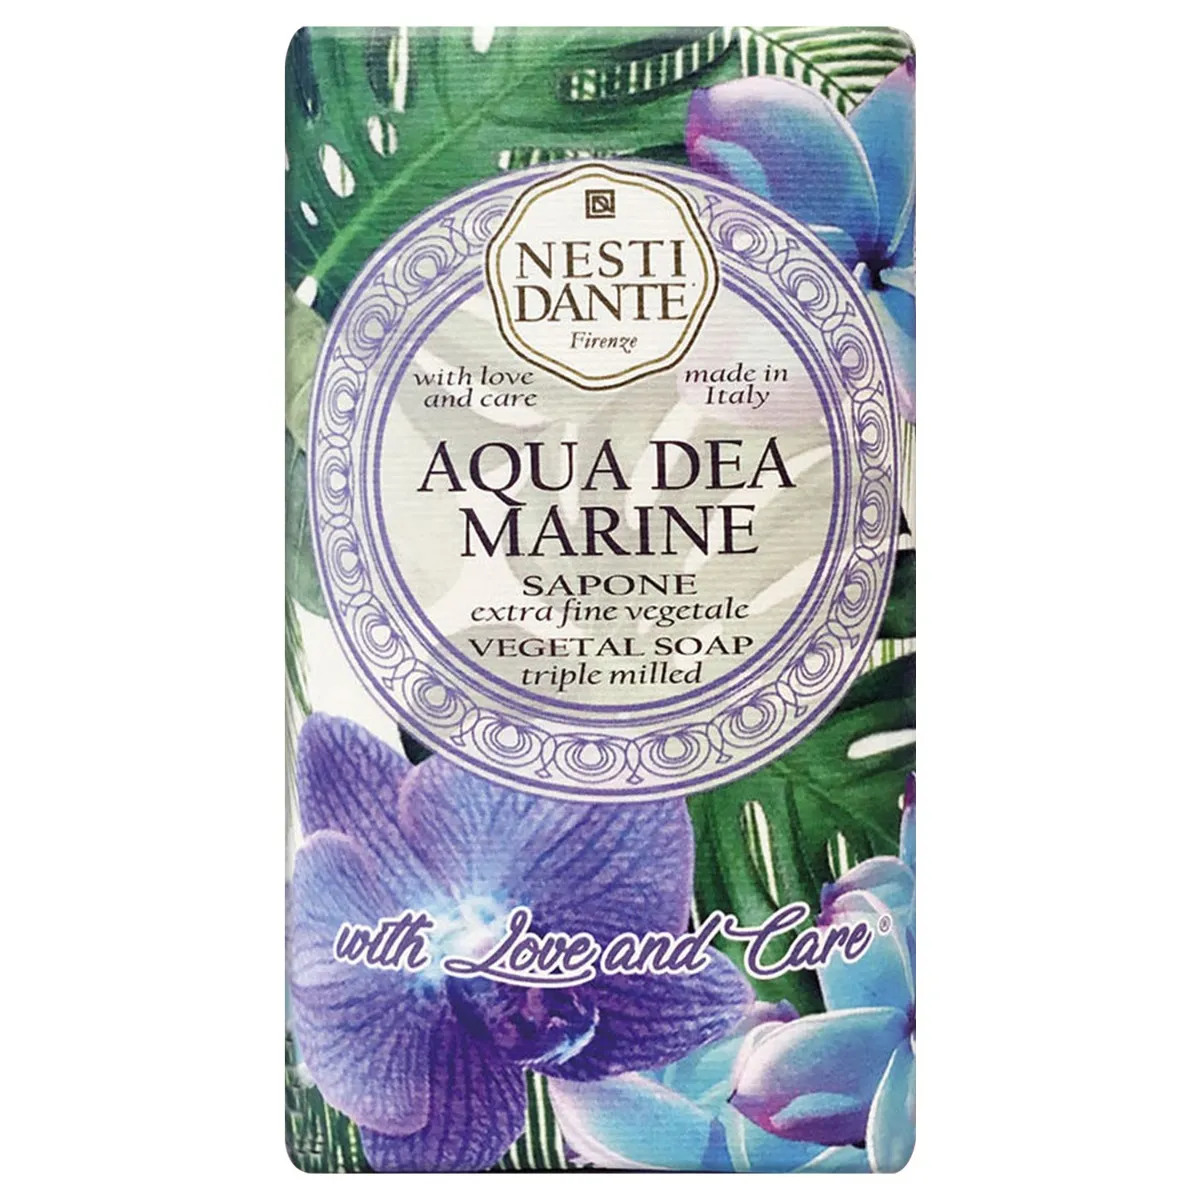 Nesti Dante With love and Care Aqua Dea Marine mydło w kostce, 250 g